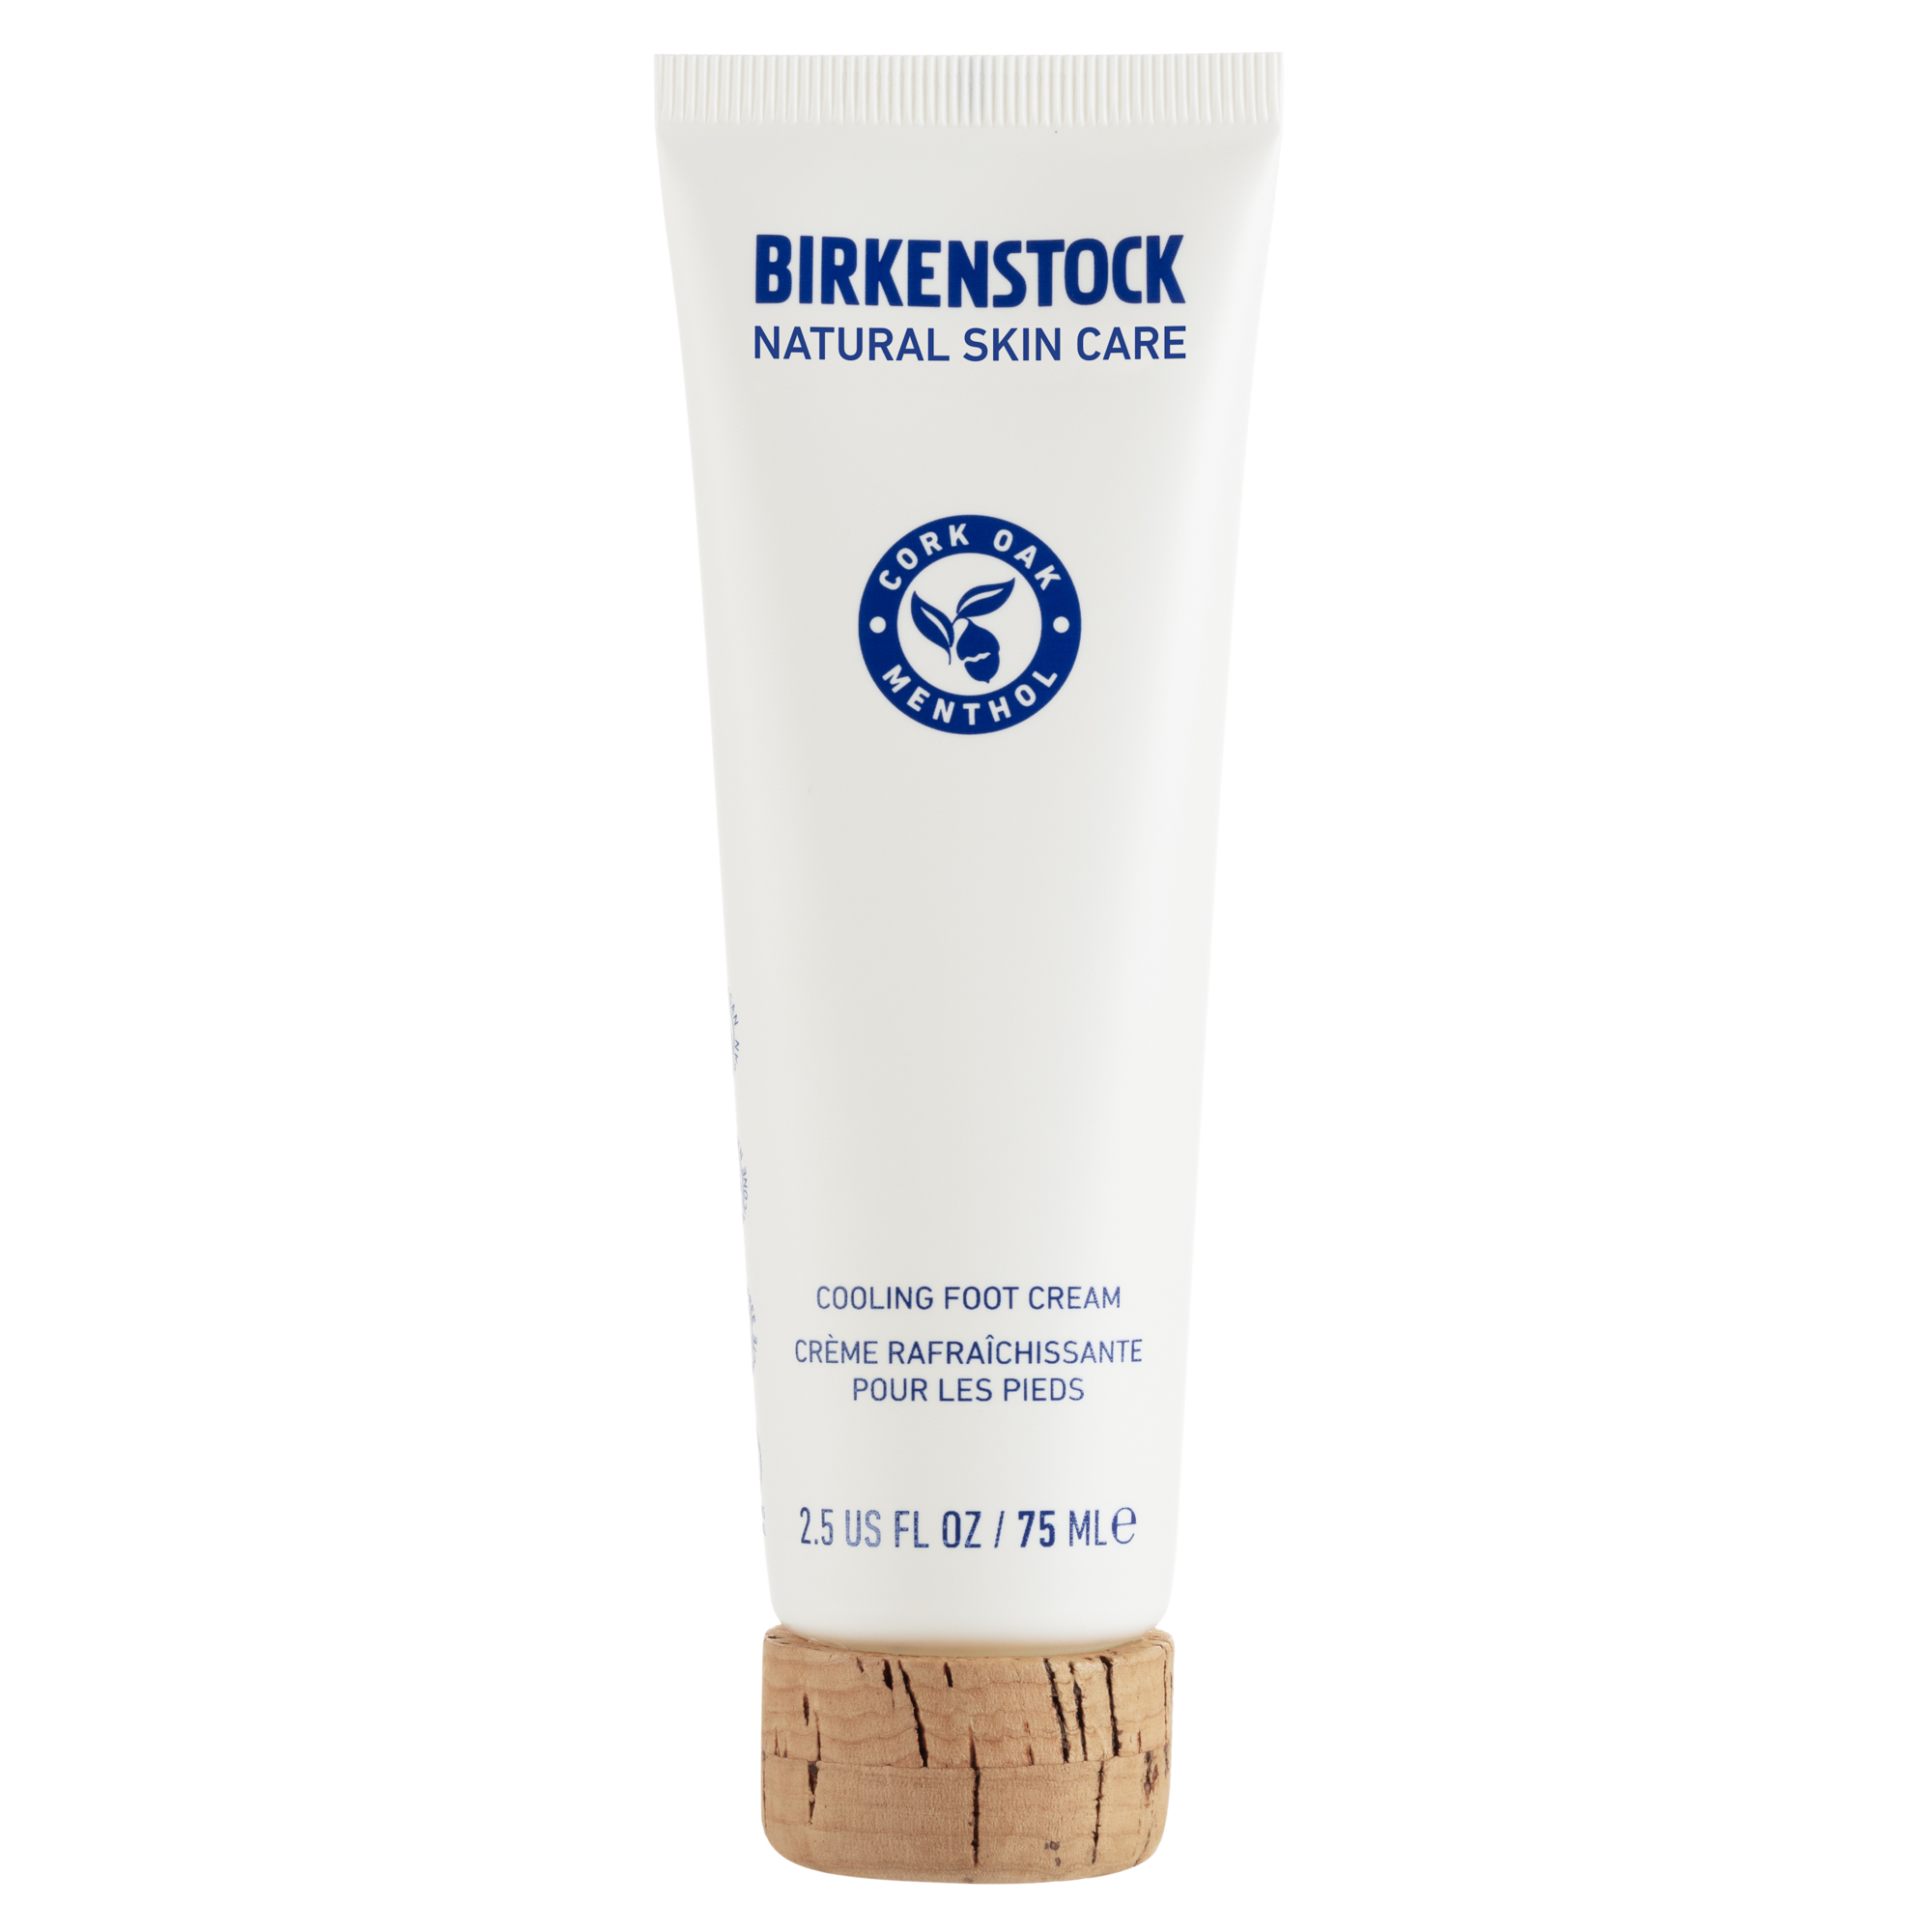 birkenstock care instructions